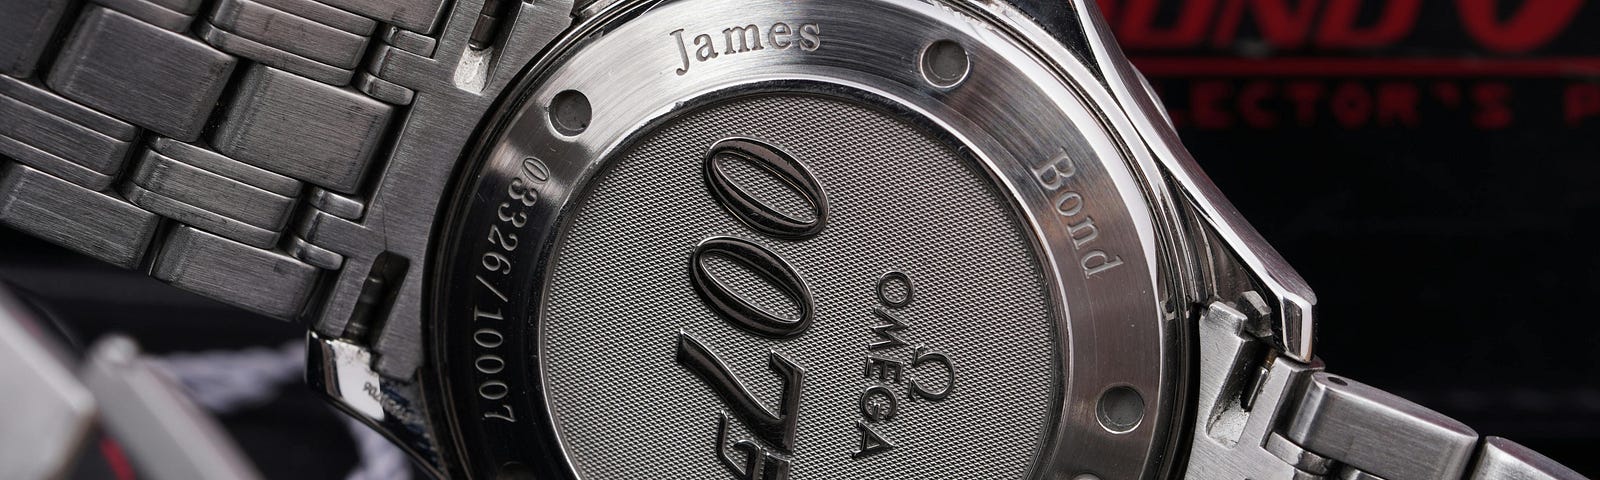 An Omega watch, James Bond edition